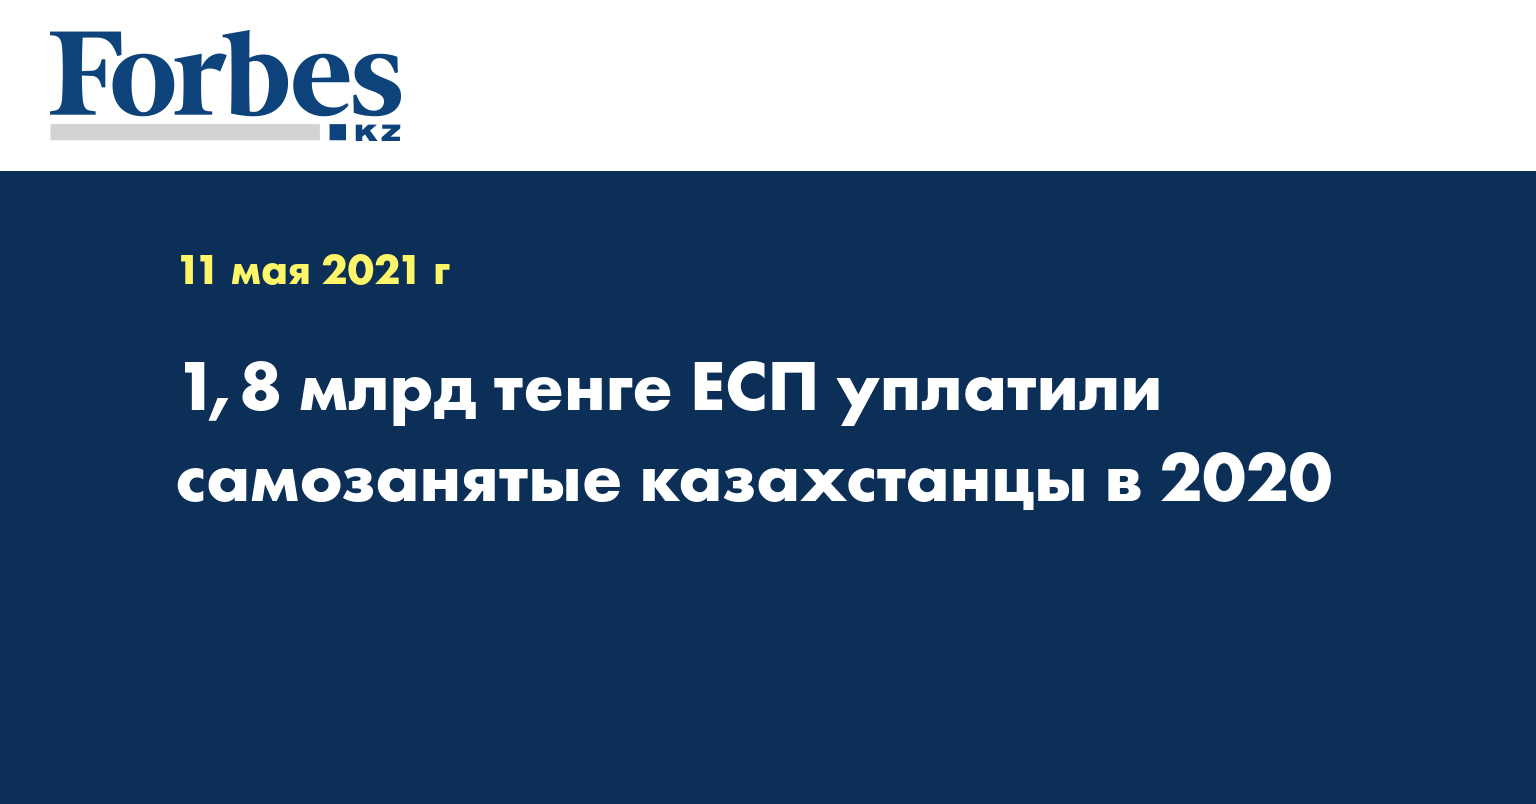 1,8 млрд тенге ЕСП уплатили самозанятые казахстанцы в 2020